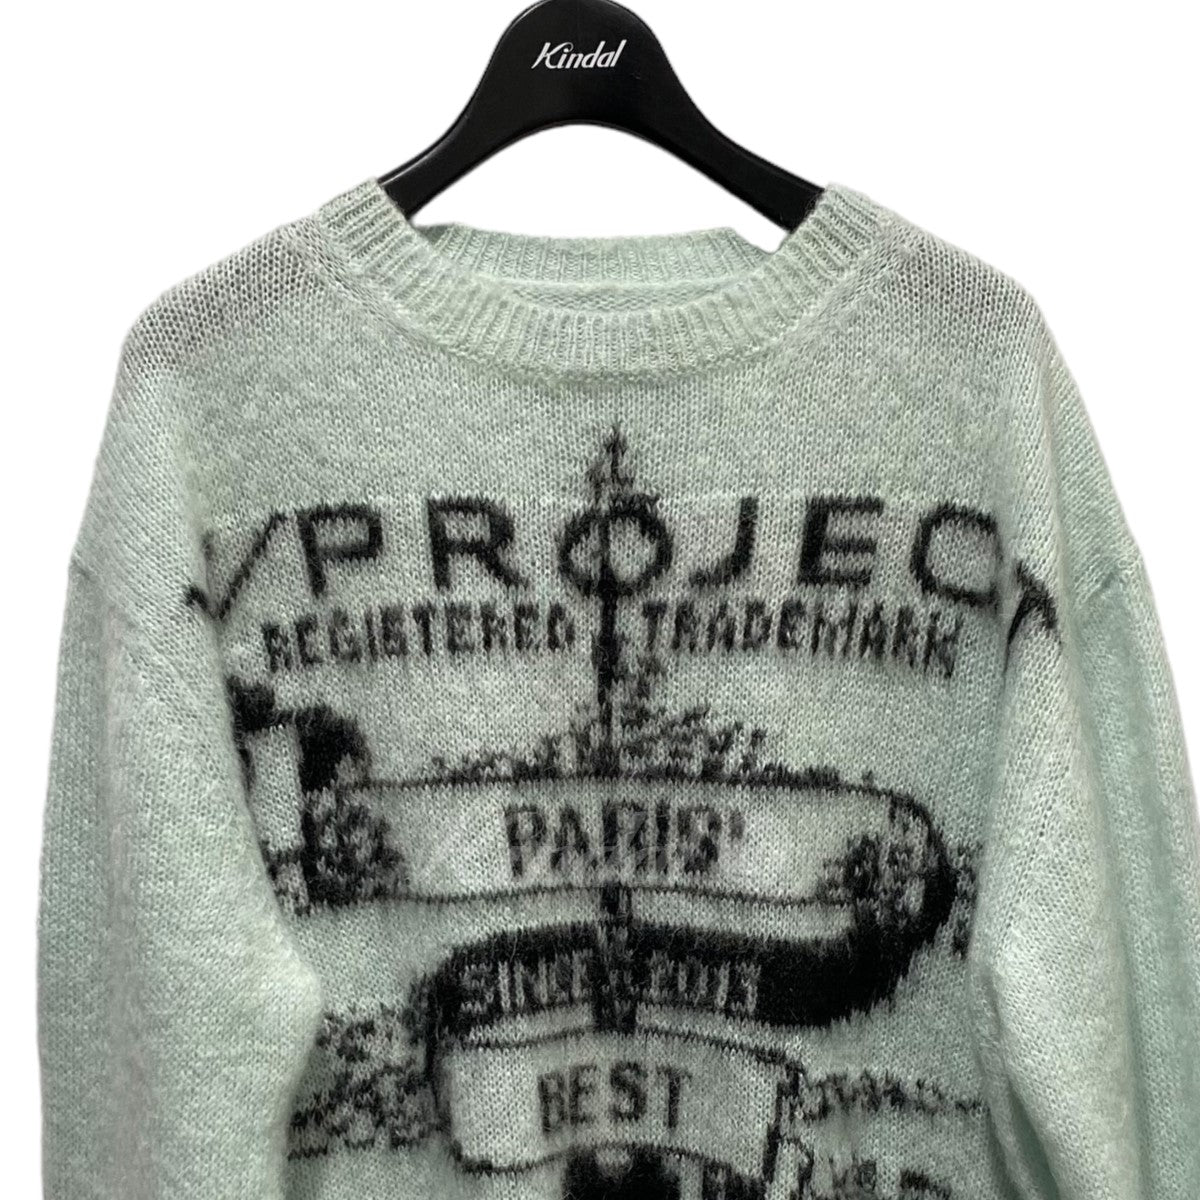 Y PROJECT(ワイプロジェクト) Paris Best Jacquard Sweater モヘア混 ...